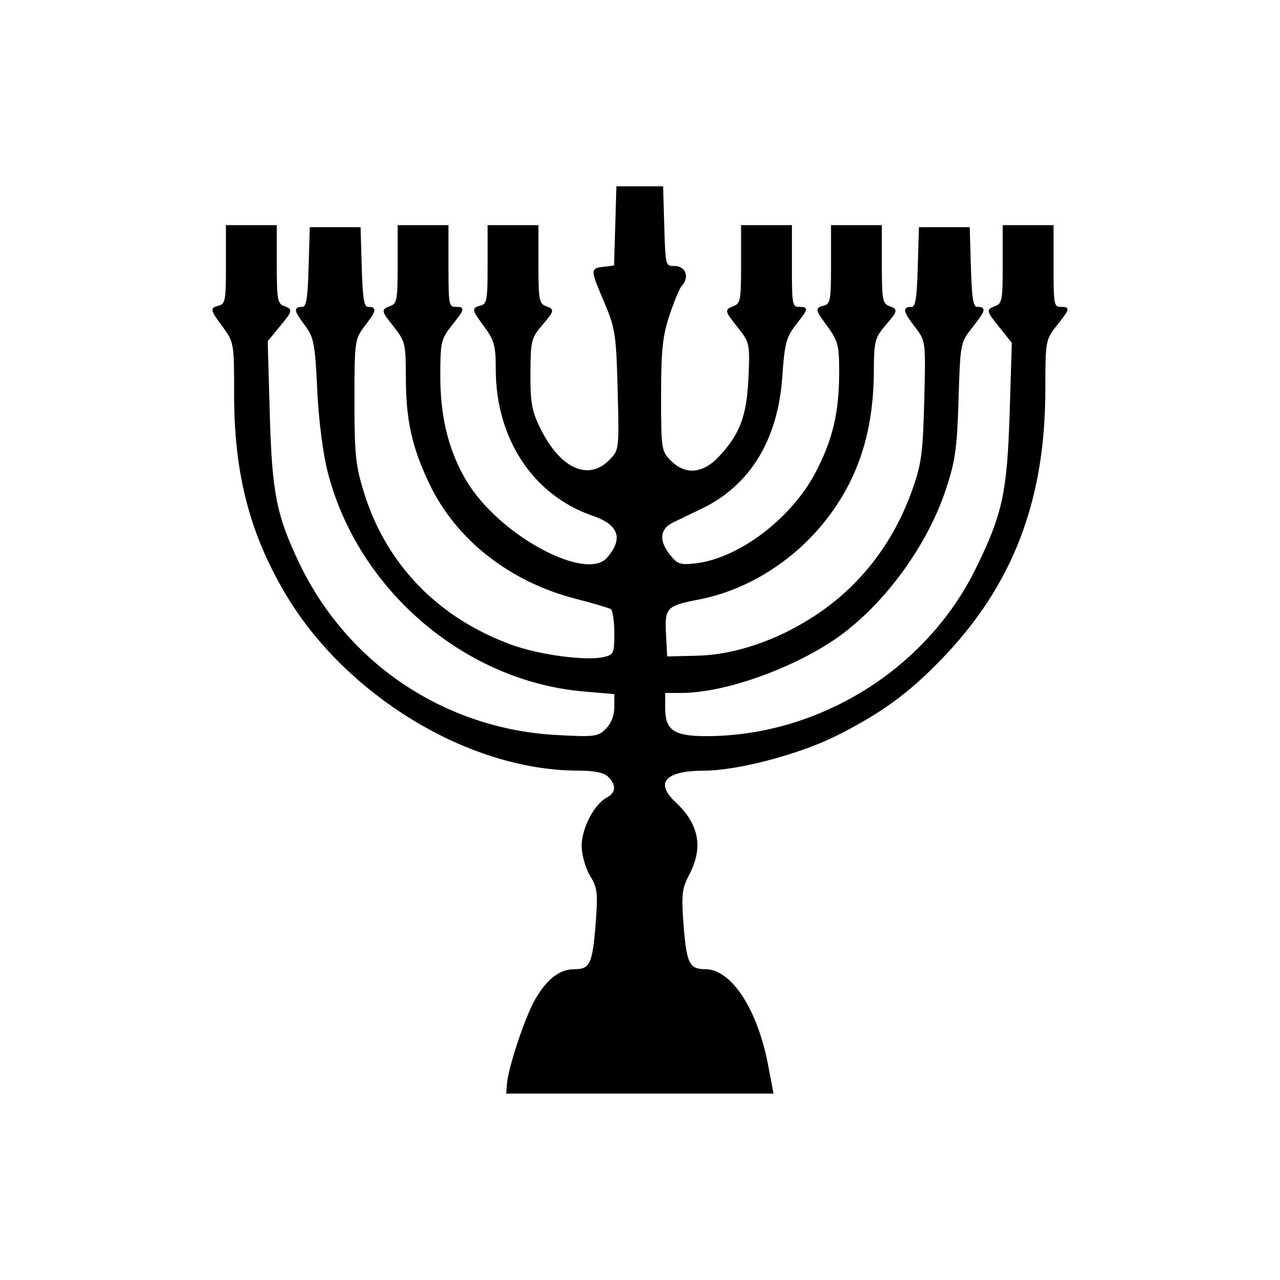 MENORAH Vinyl Decal Sticker - Judaism Hanukkah Hebrew Lamp Candles